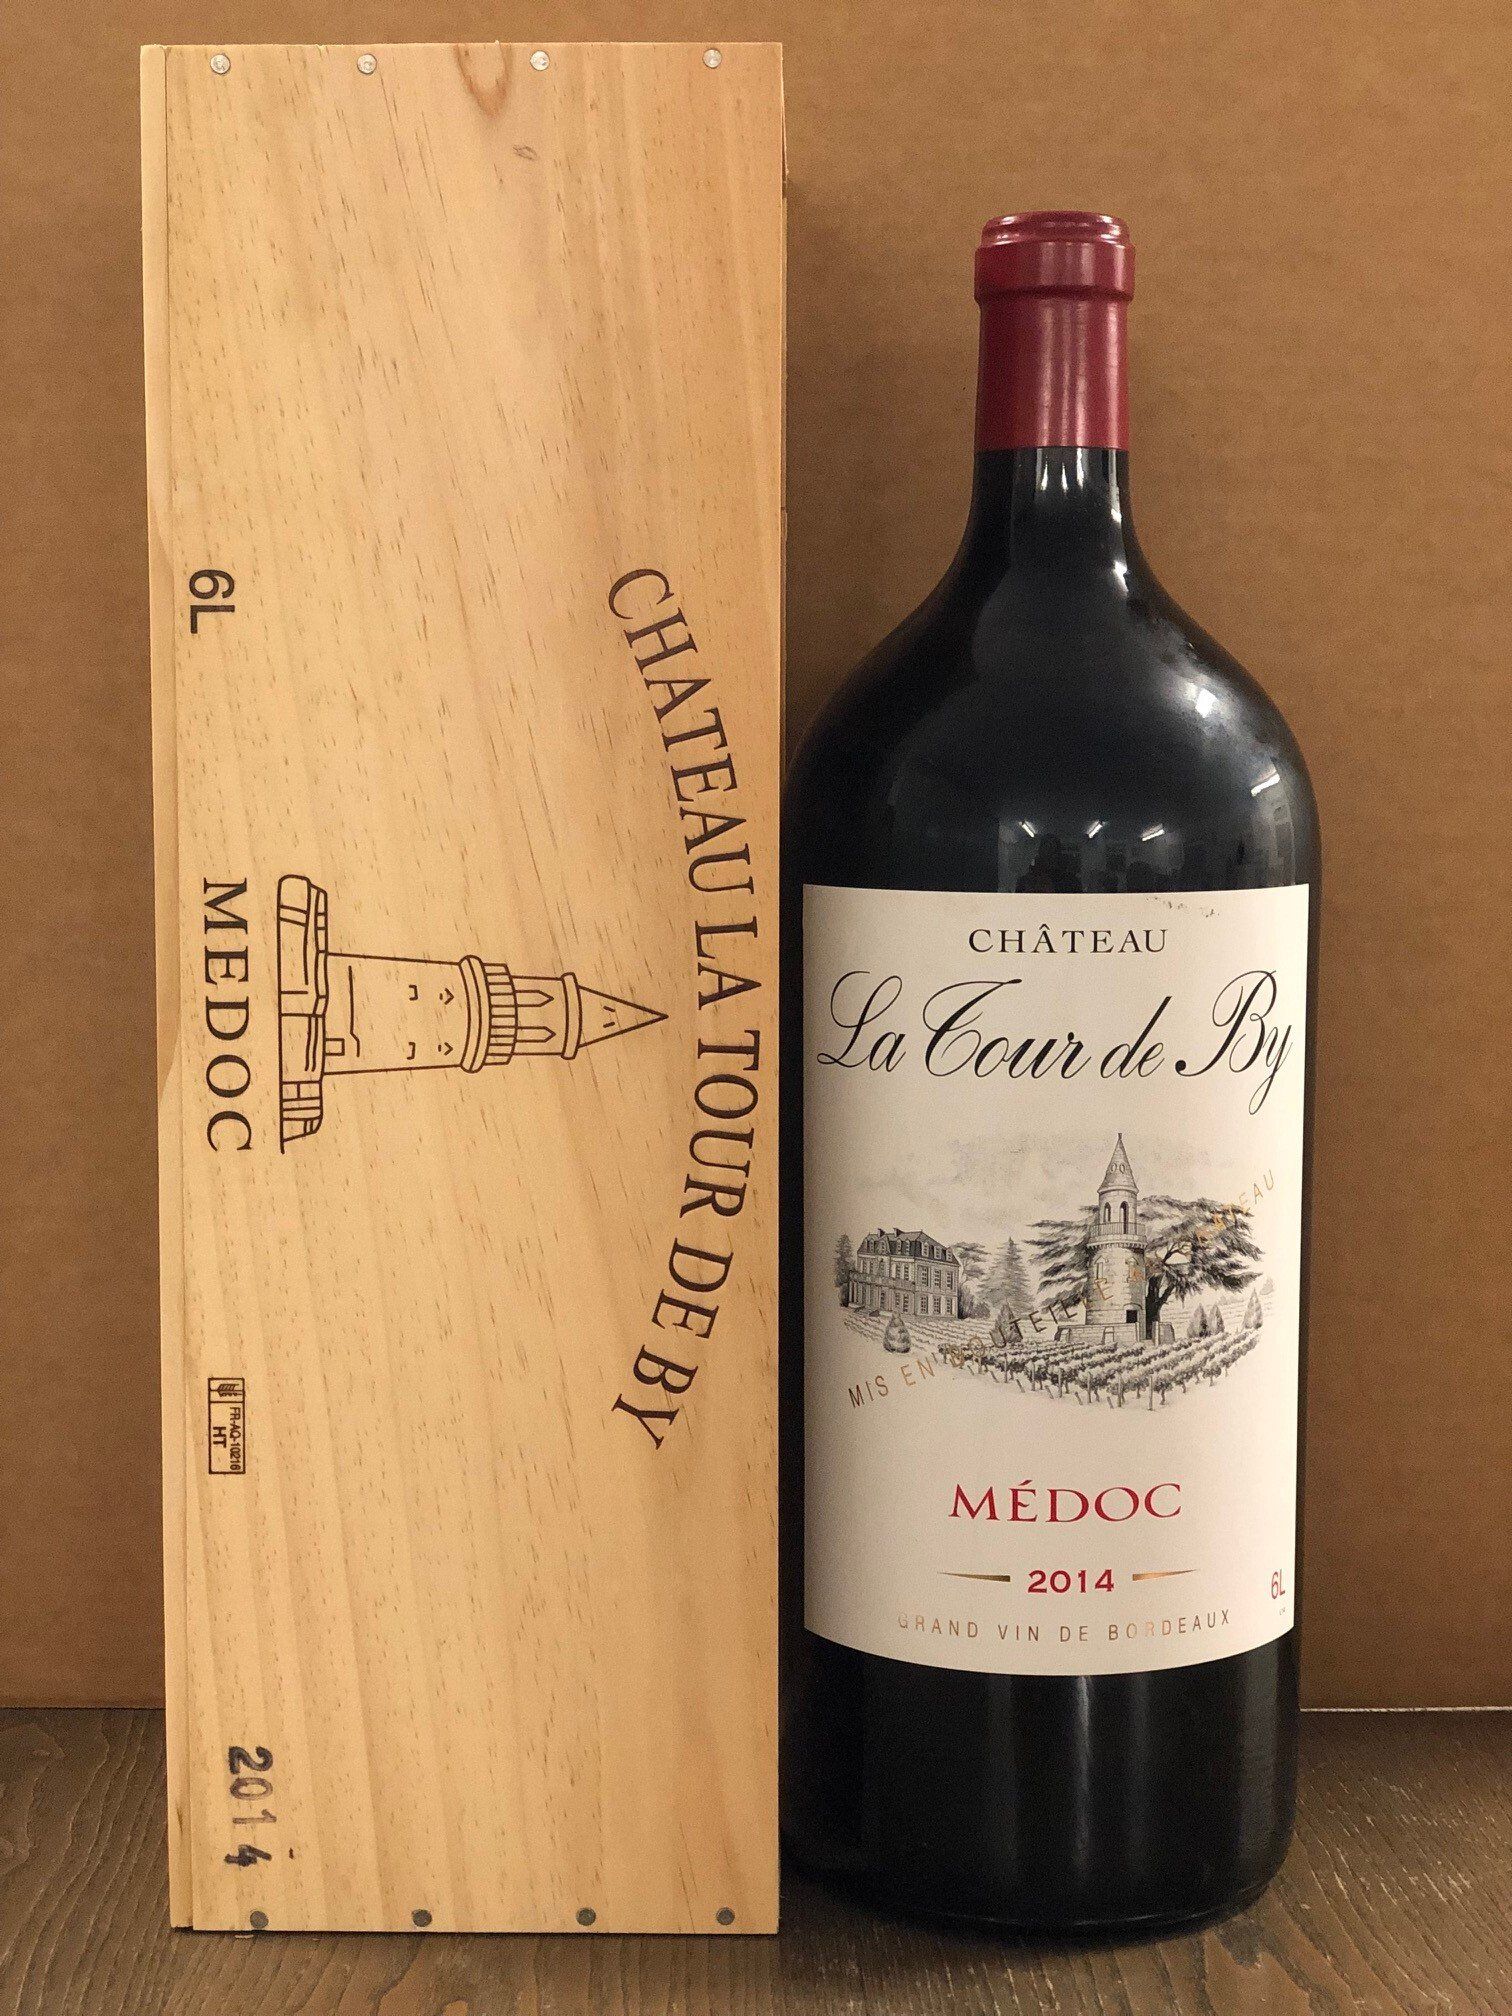 Chateau Tour de By Medoc, Bordeaux - Double Magnum, Jeroboam 5ltr & Imperial 6ltr in Wooden Gift Boxes